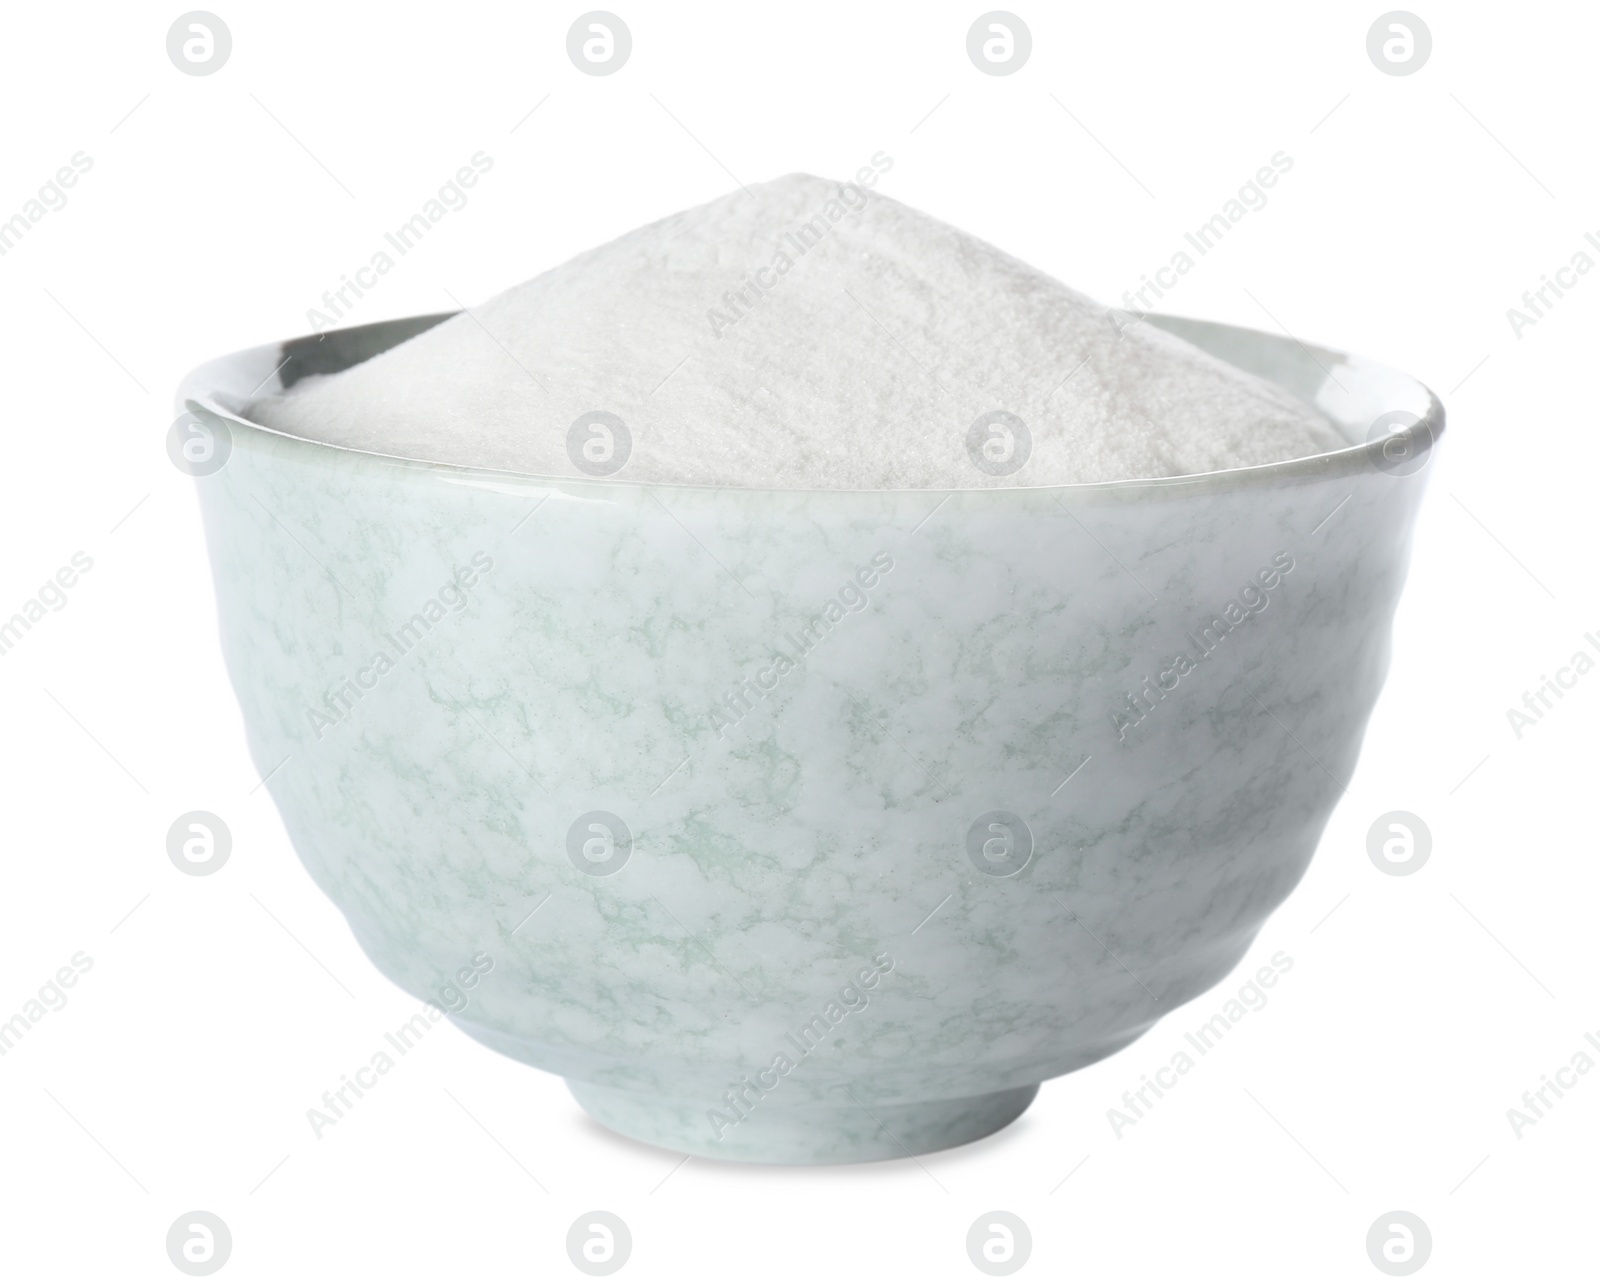 Photo of Baking soda in ceramic bowl isolated on white